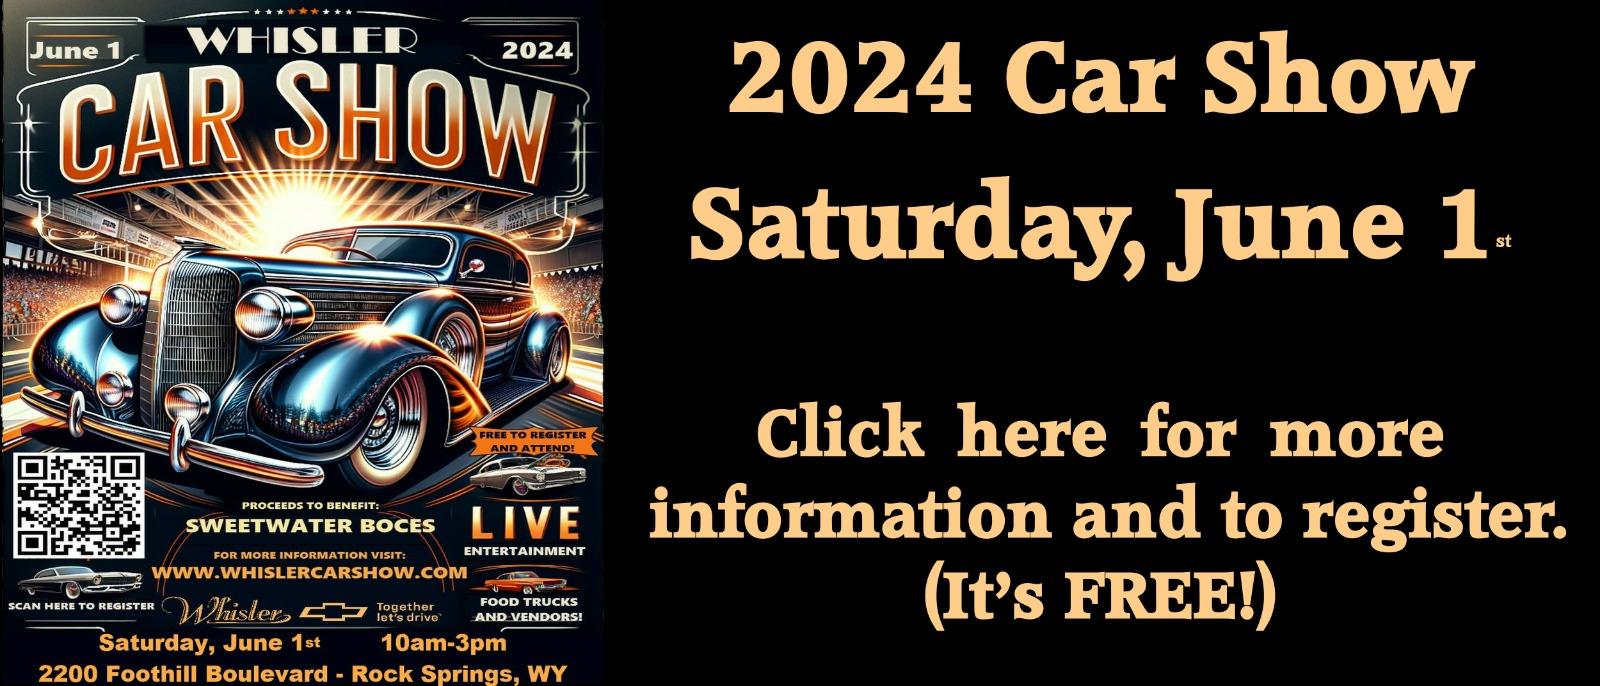 2024 Car Show 
Saturday, June 1st